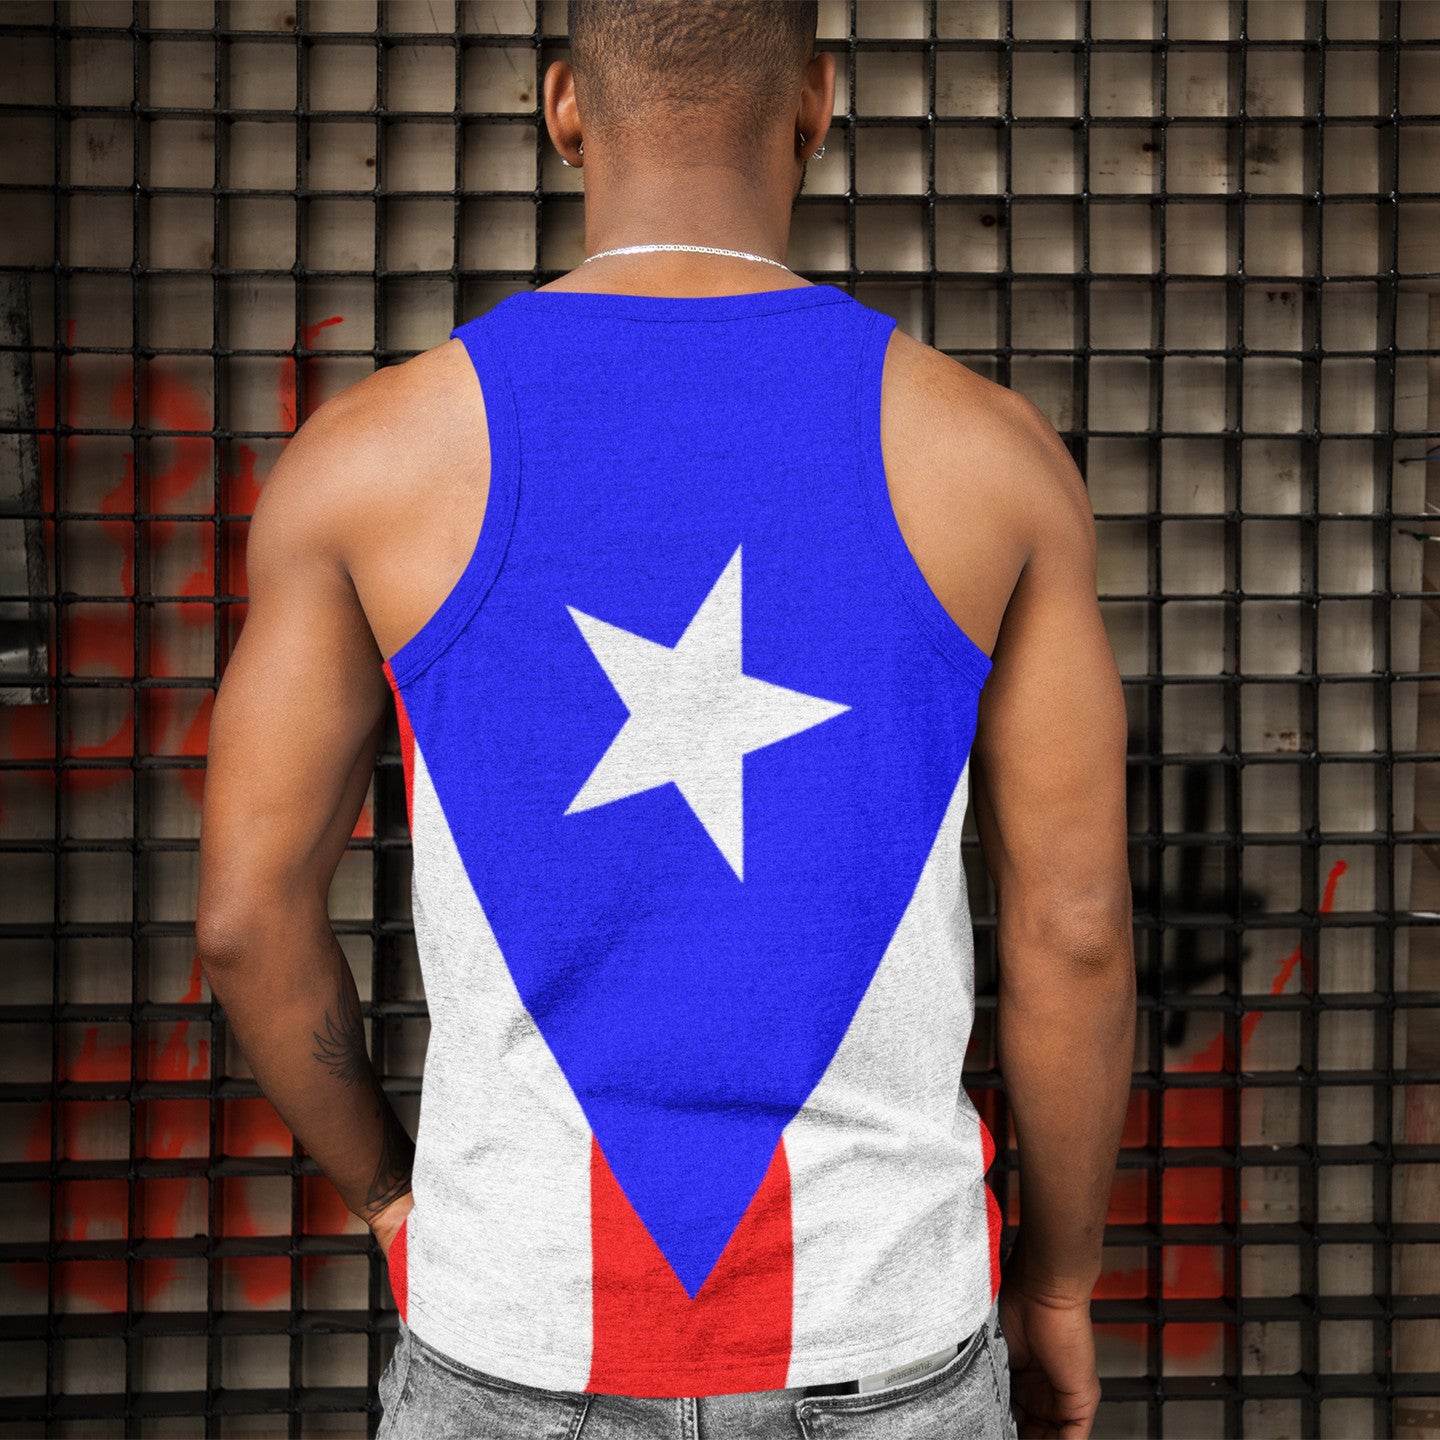 Puerto Rico Flag - Men's Tank Top